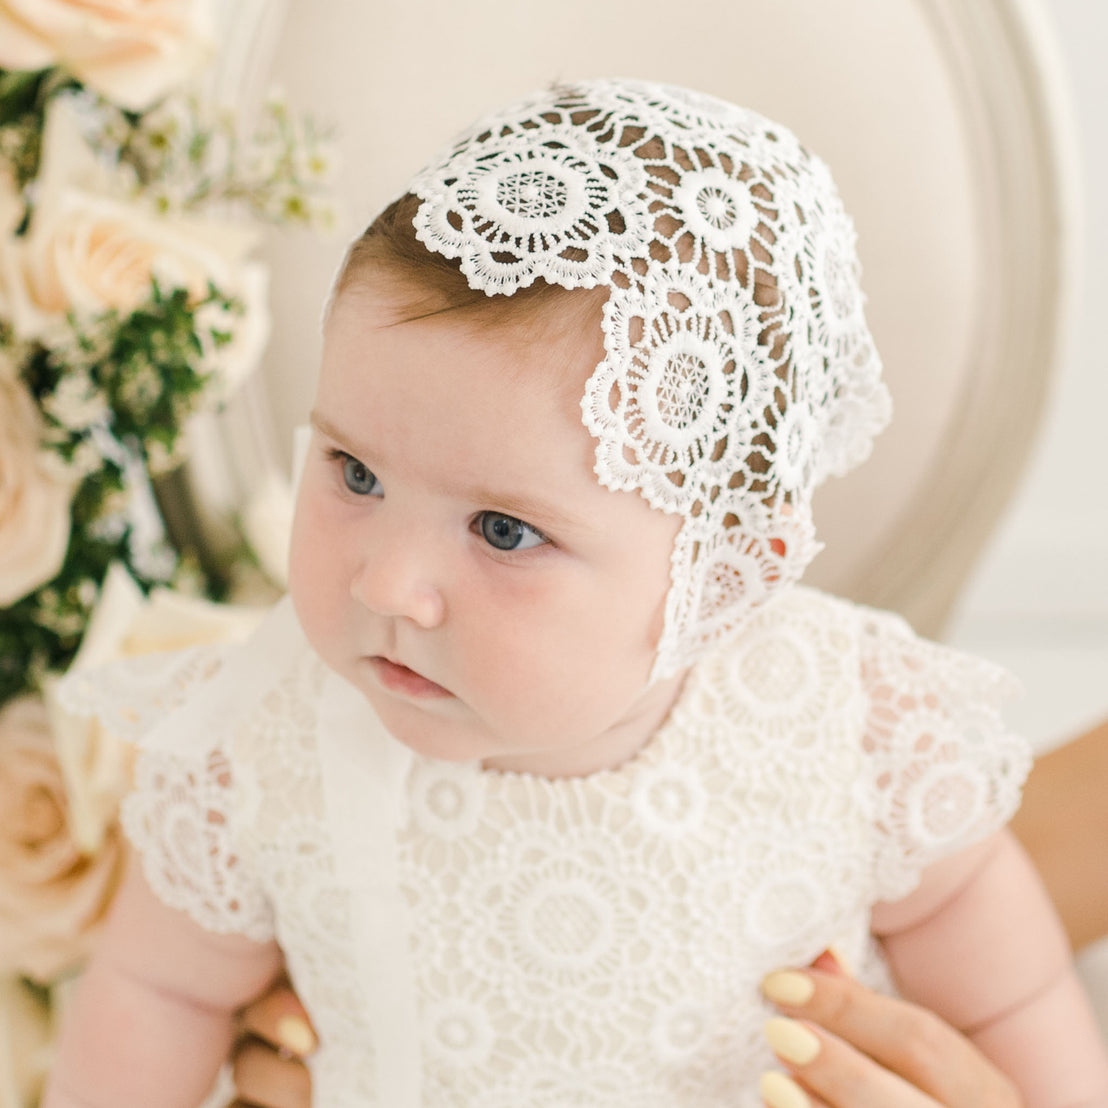 Baby girl wearing lace christening bonnet.